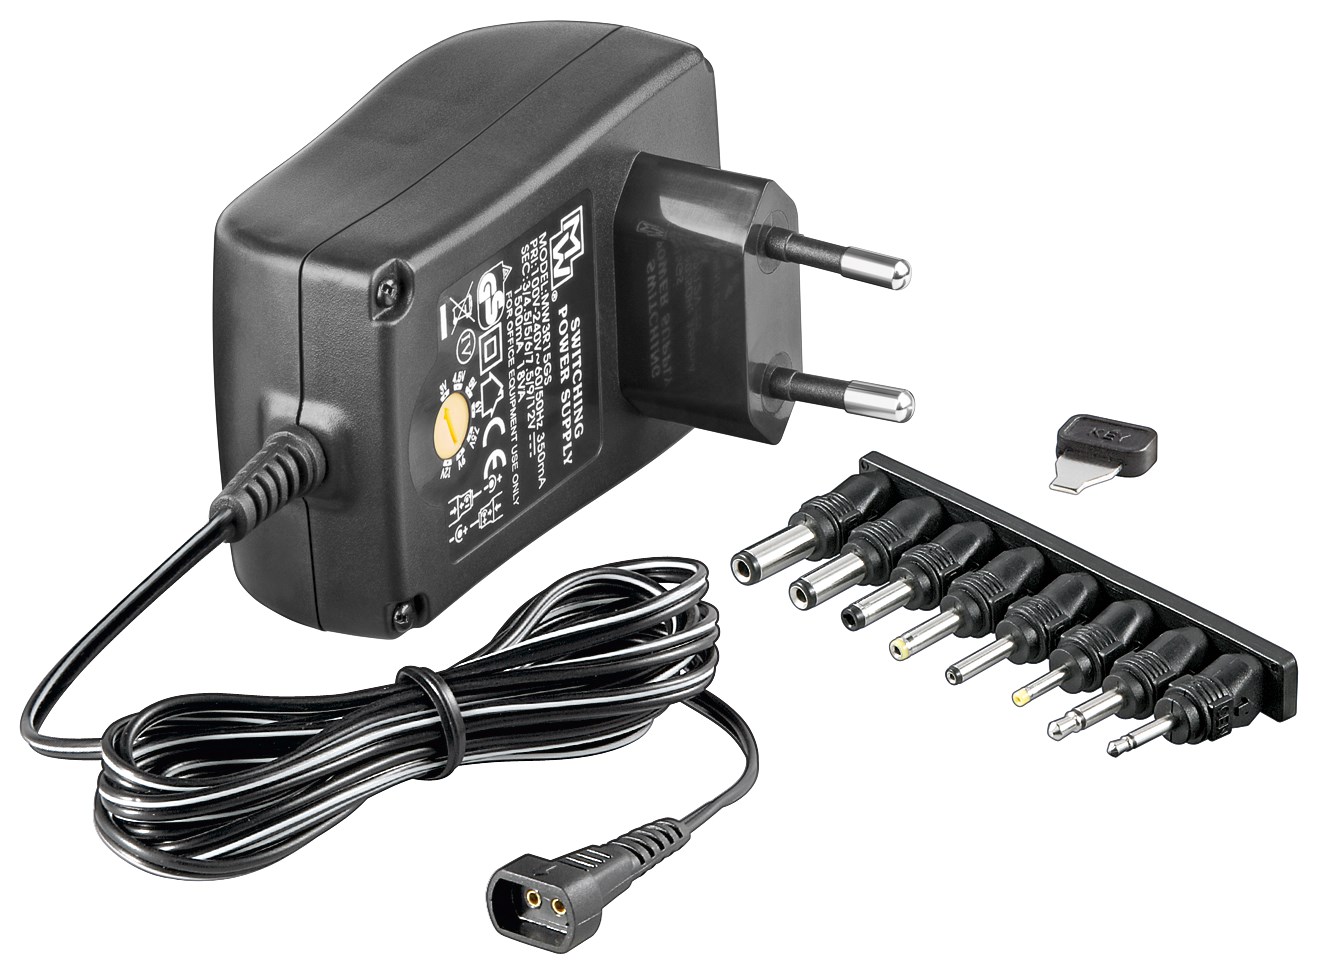 12V 24V Ladekabel mit Micro USB Anschluss  Elektronik und Technik bei  Henri Elektronik günstig bestellen